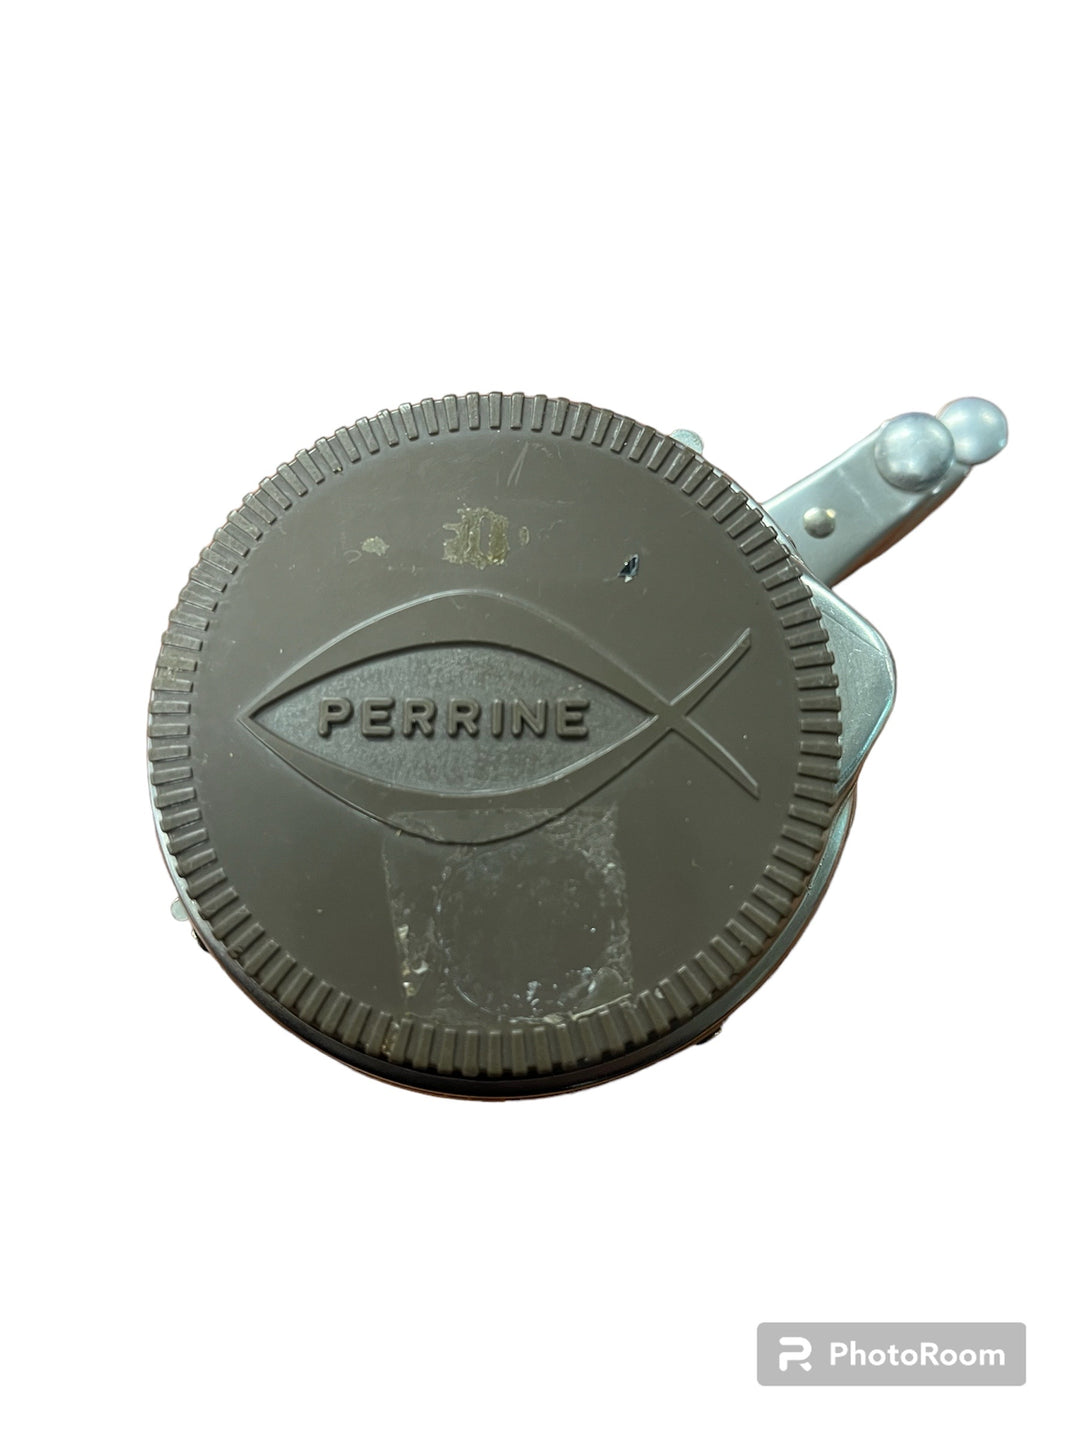 Perrine No. 80 Automatic Reel